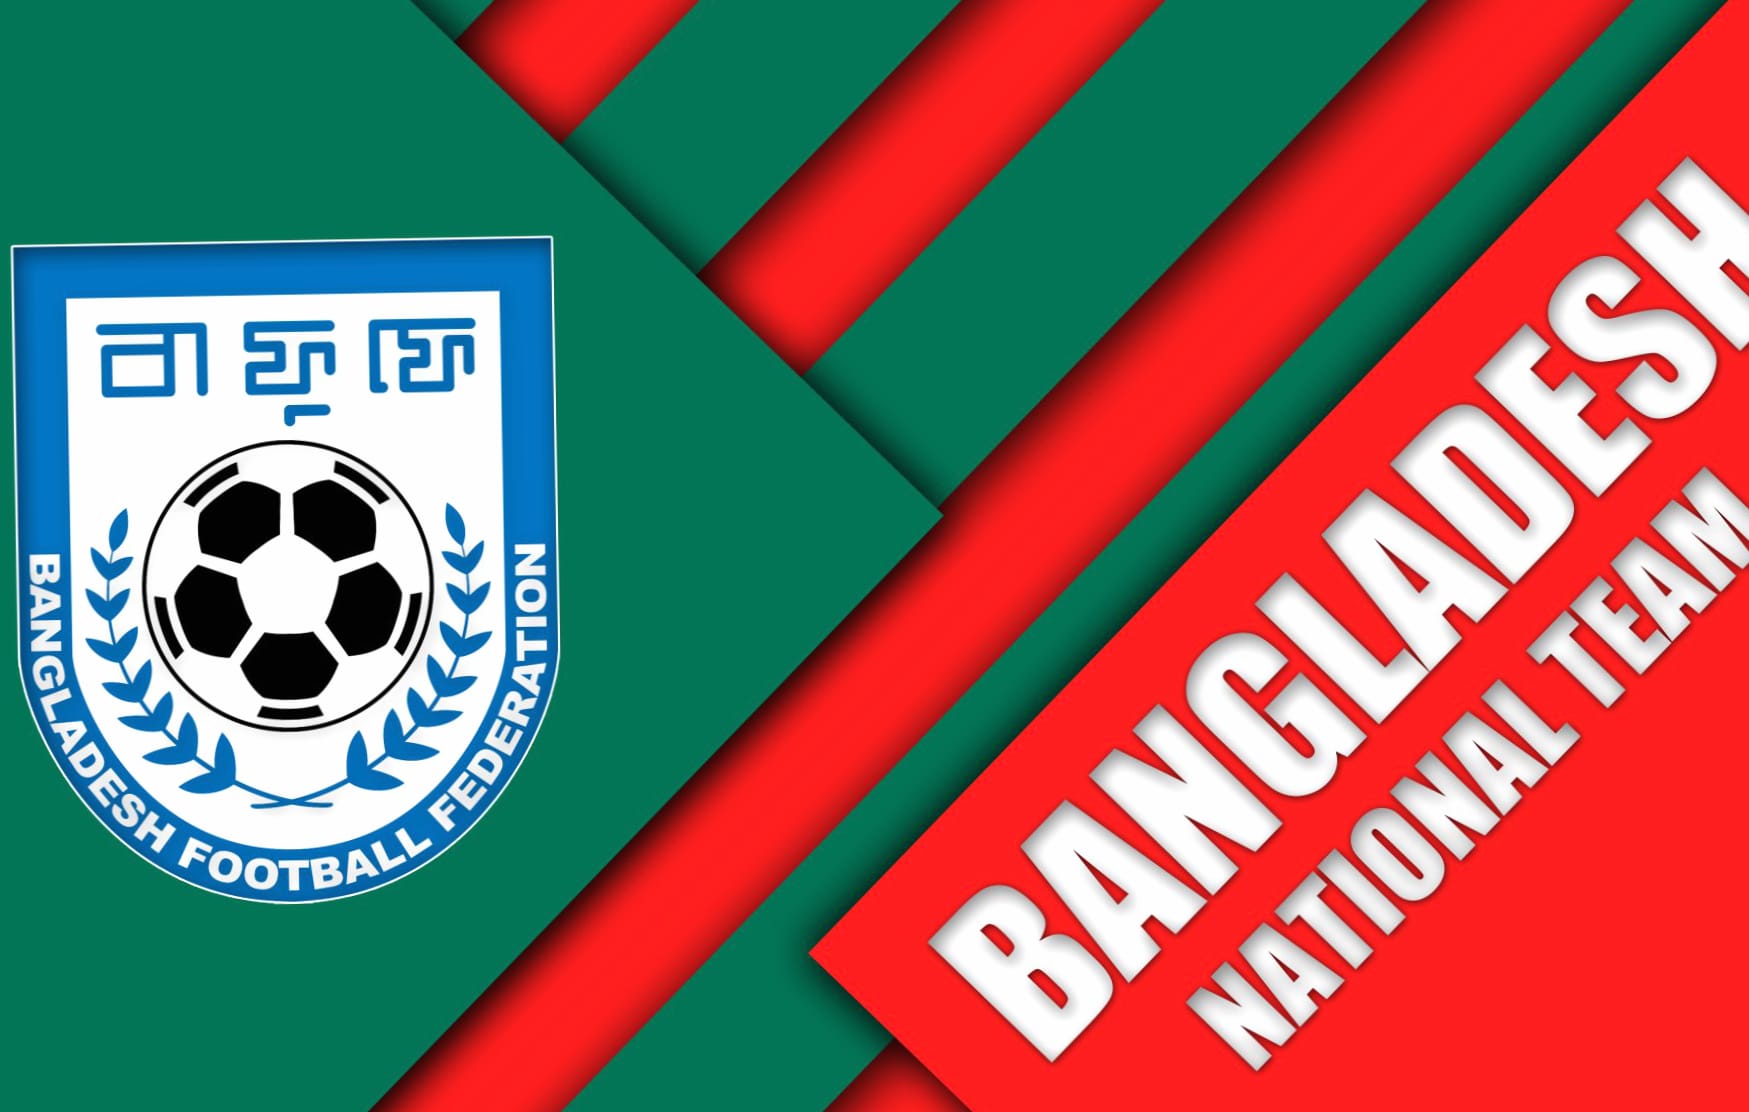 Bangladesh National Football Team at 1024 x 768 size wallpapers HD quality